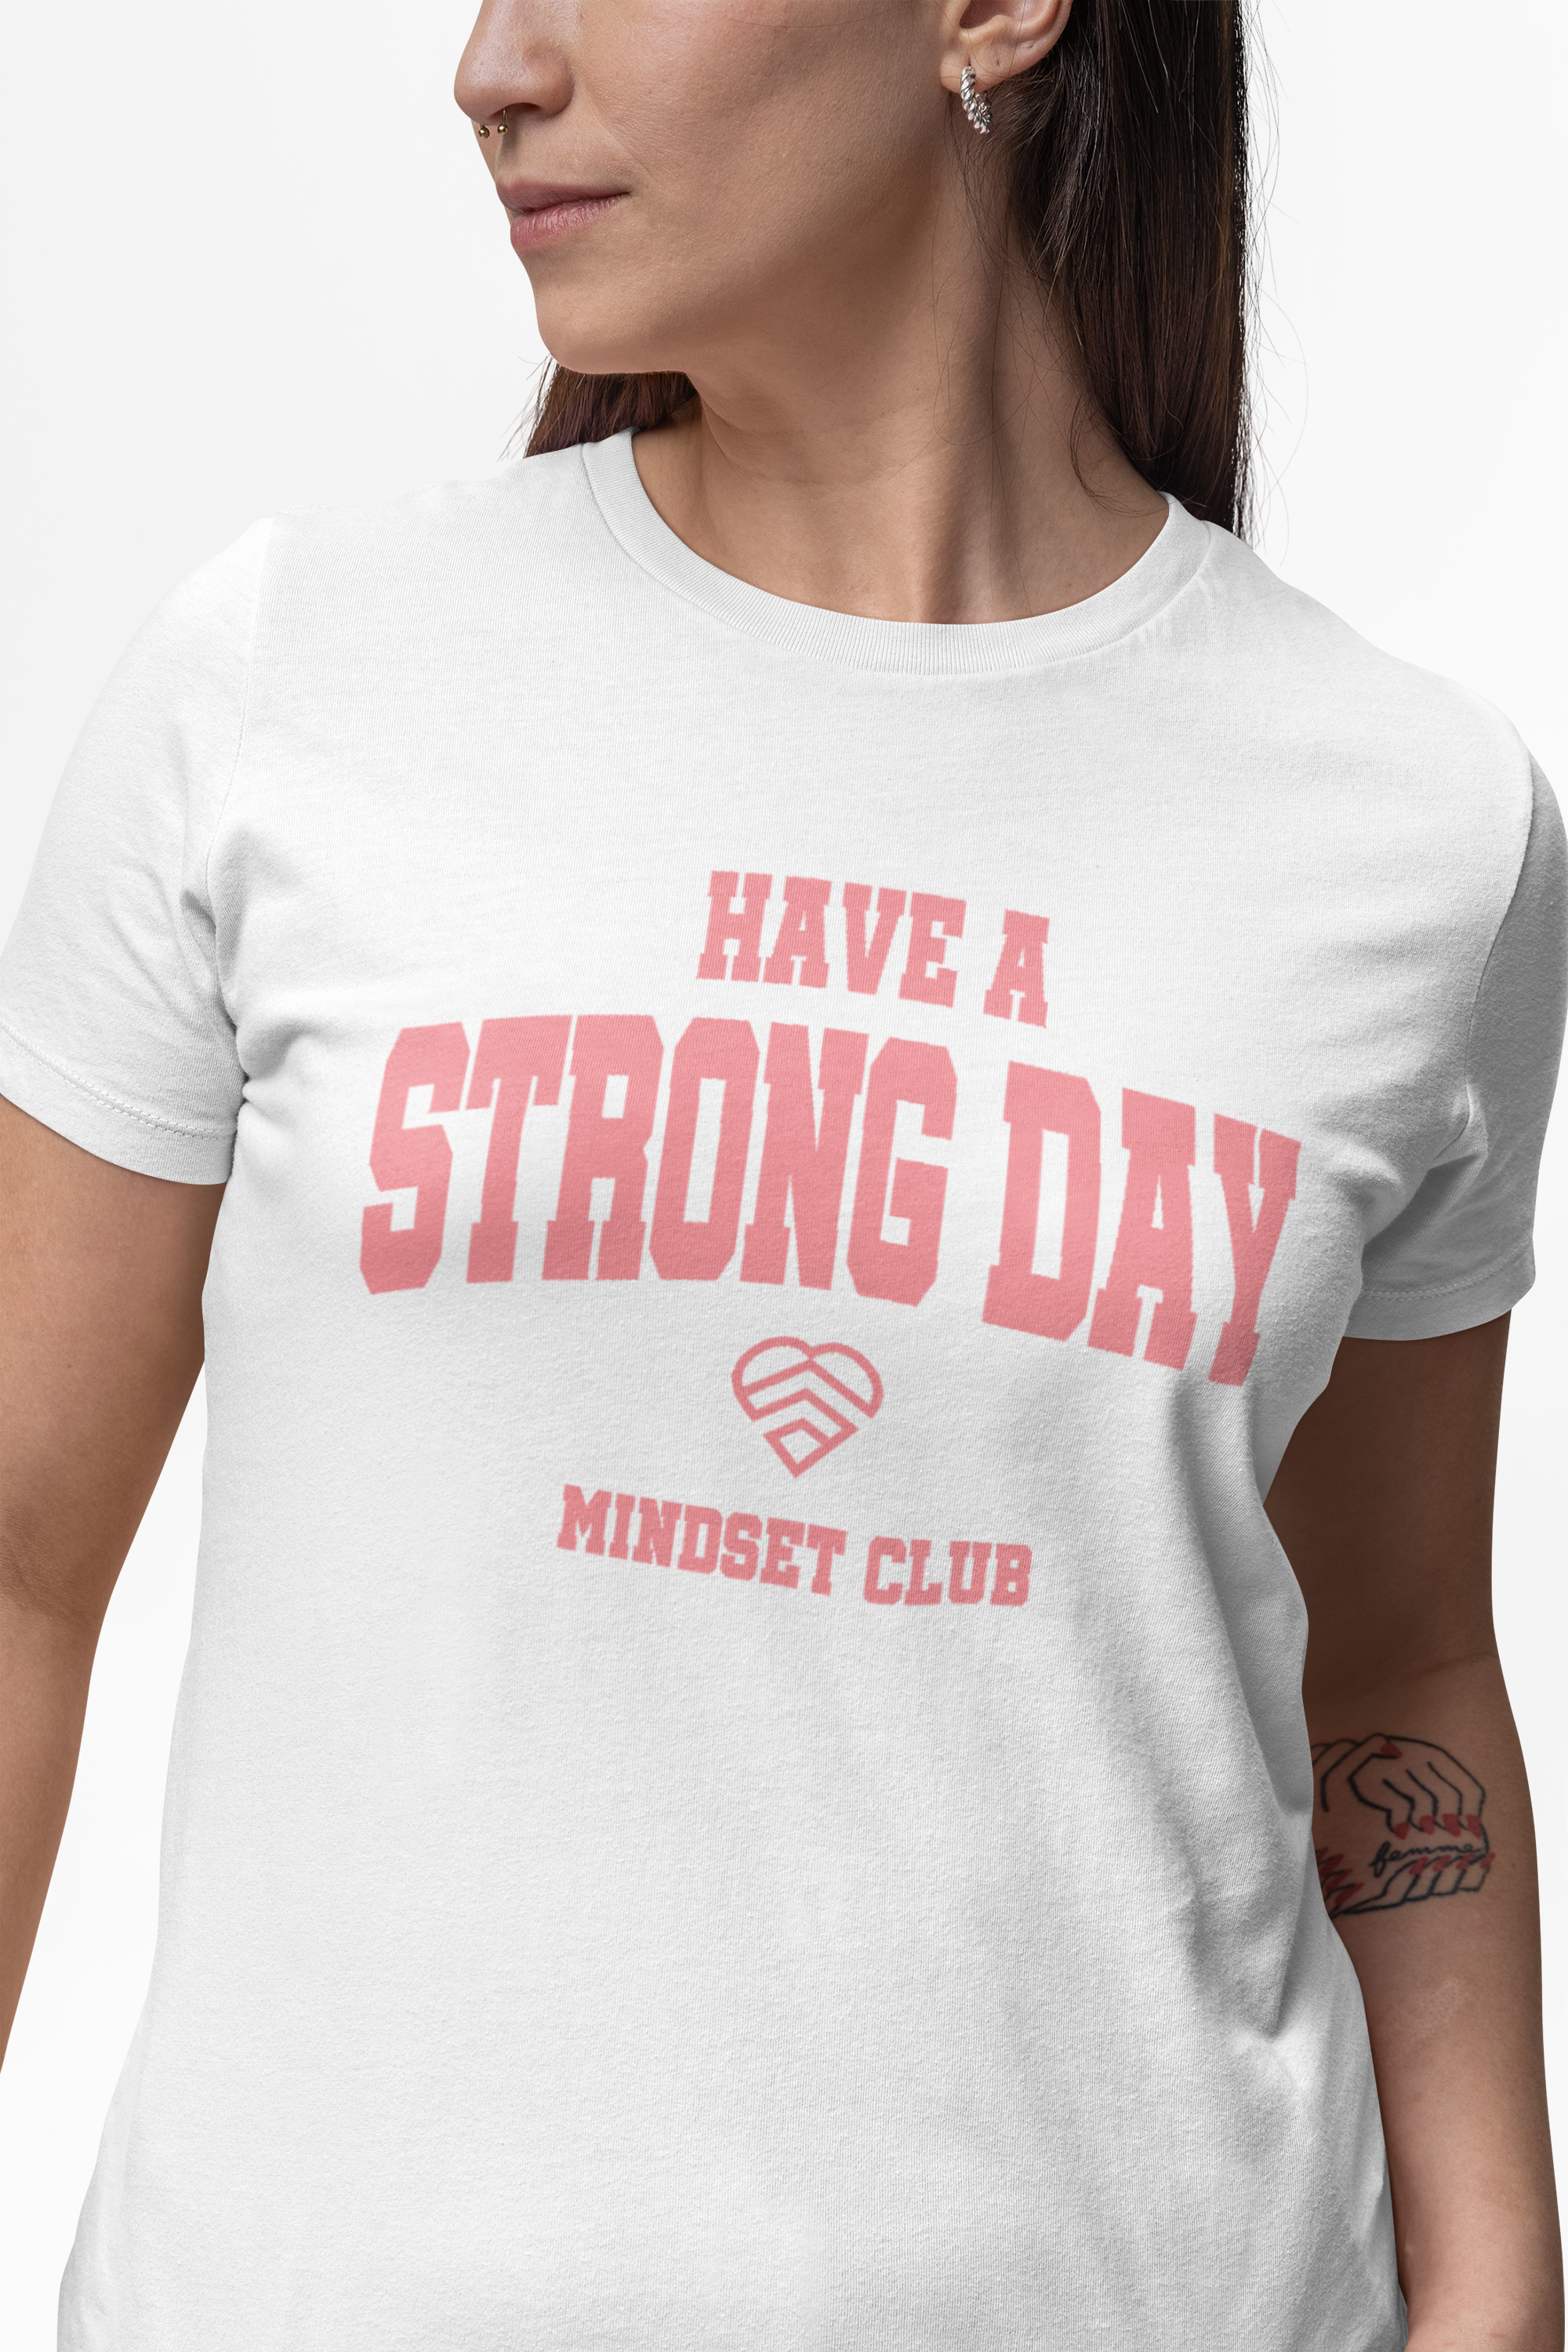 Mindset Club Statement Shirt - White & Pink